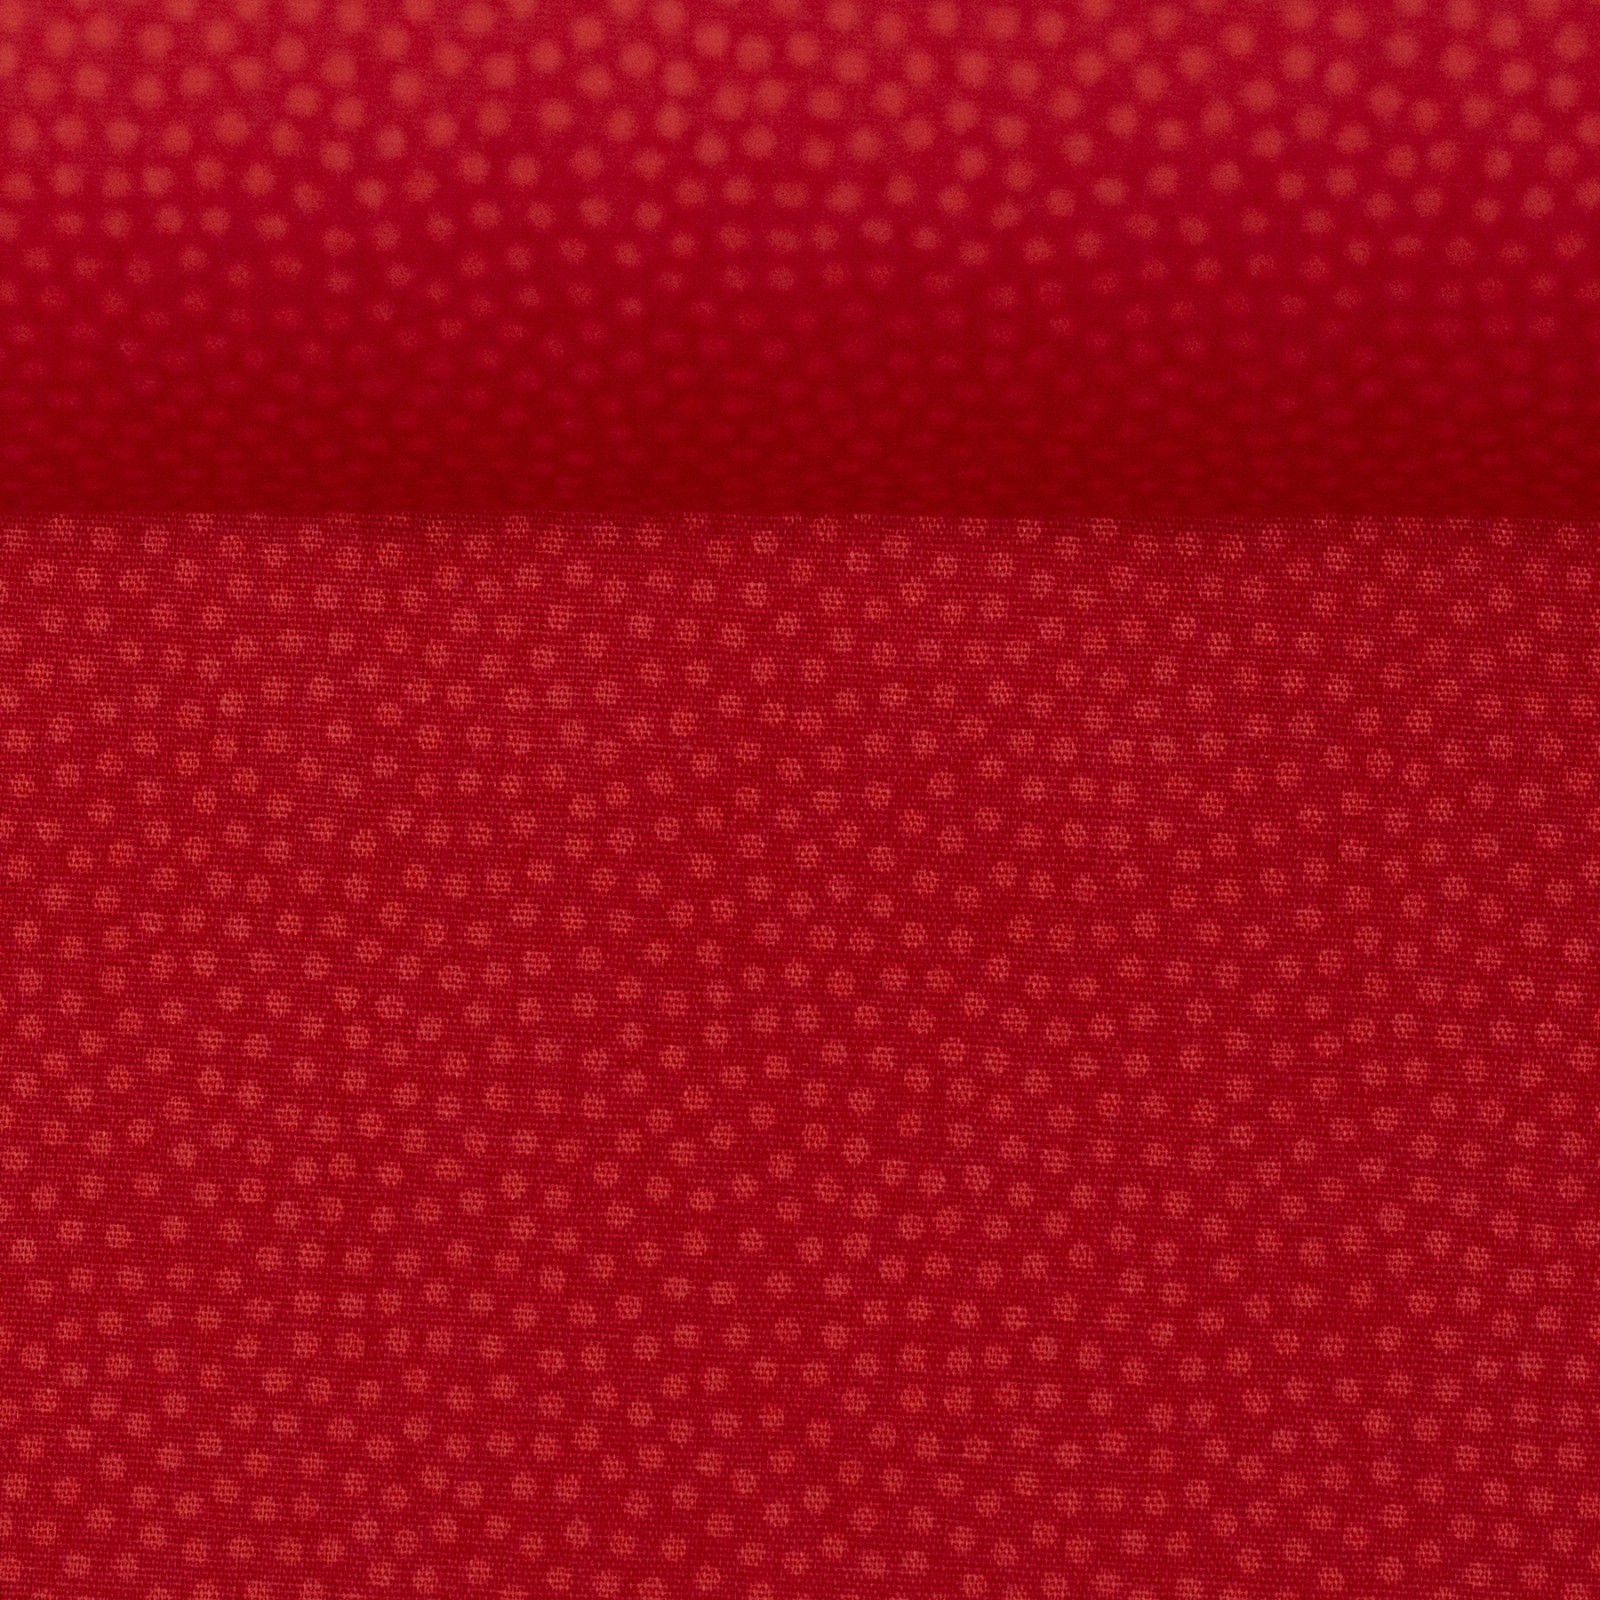 Baumwollwebware - unregelmäßige Punkte - rot - Ton in Ton | 11,00 EUR/m 3